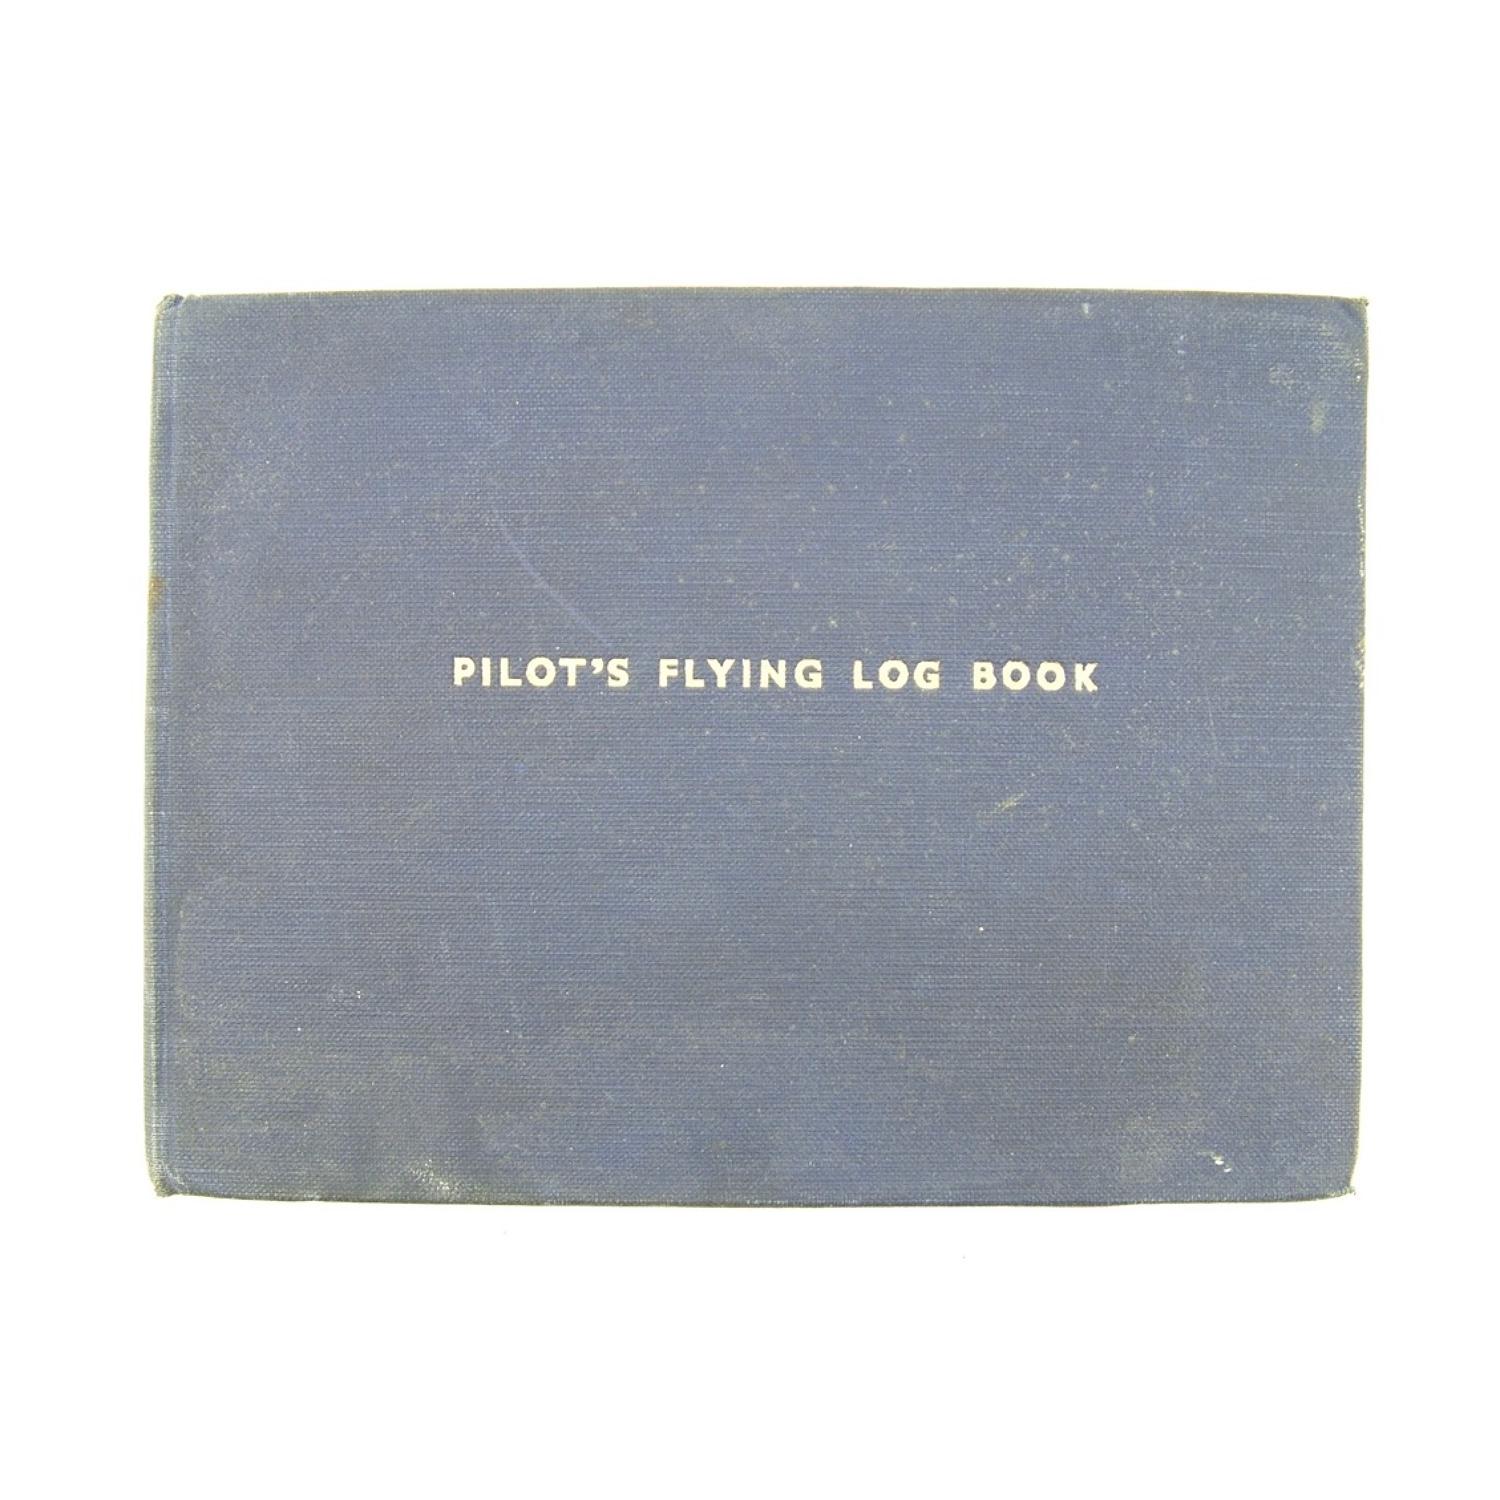 Pilot's flying log book